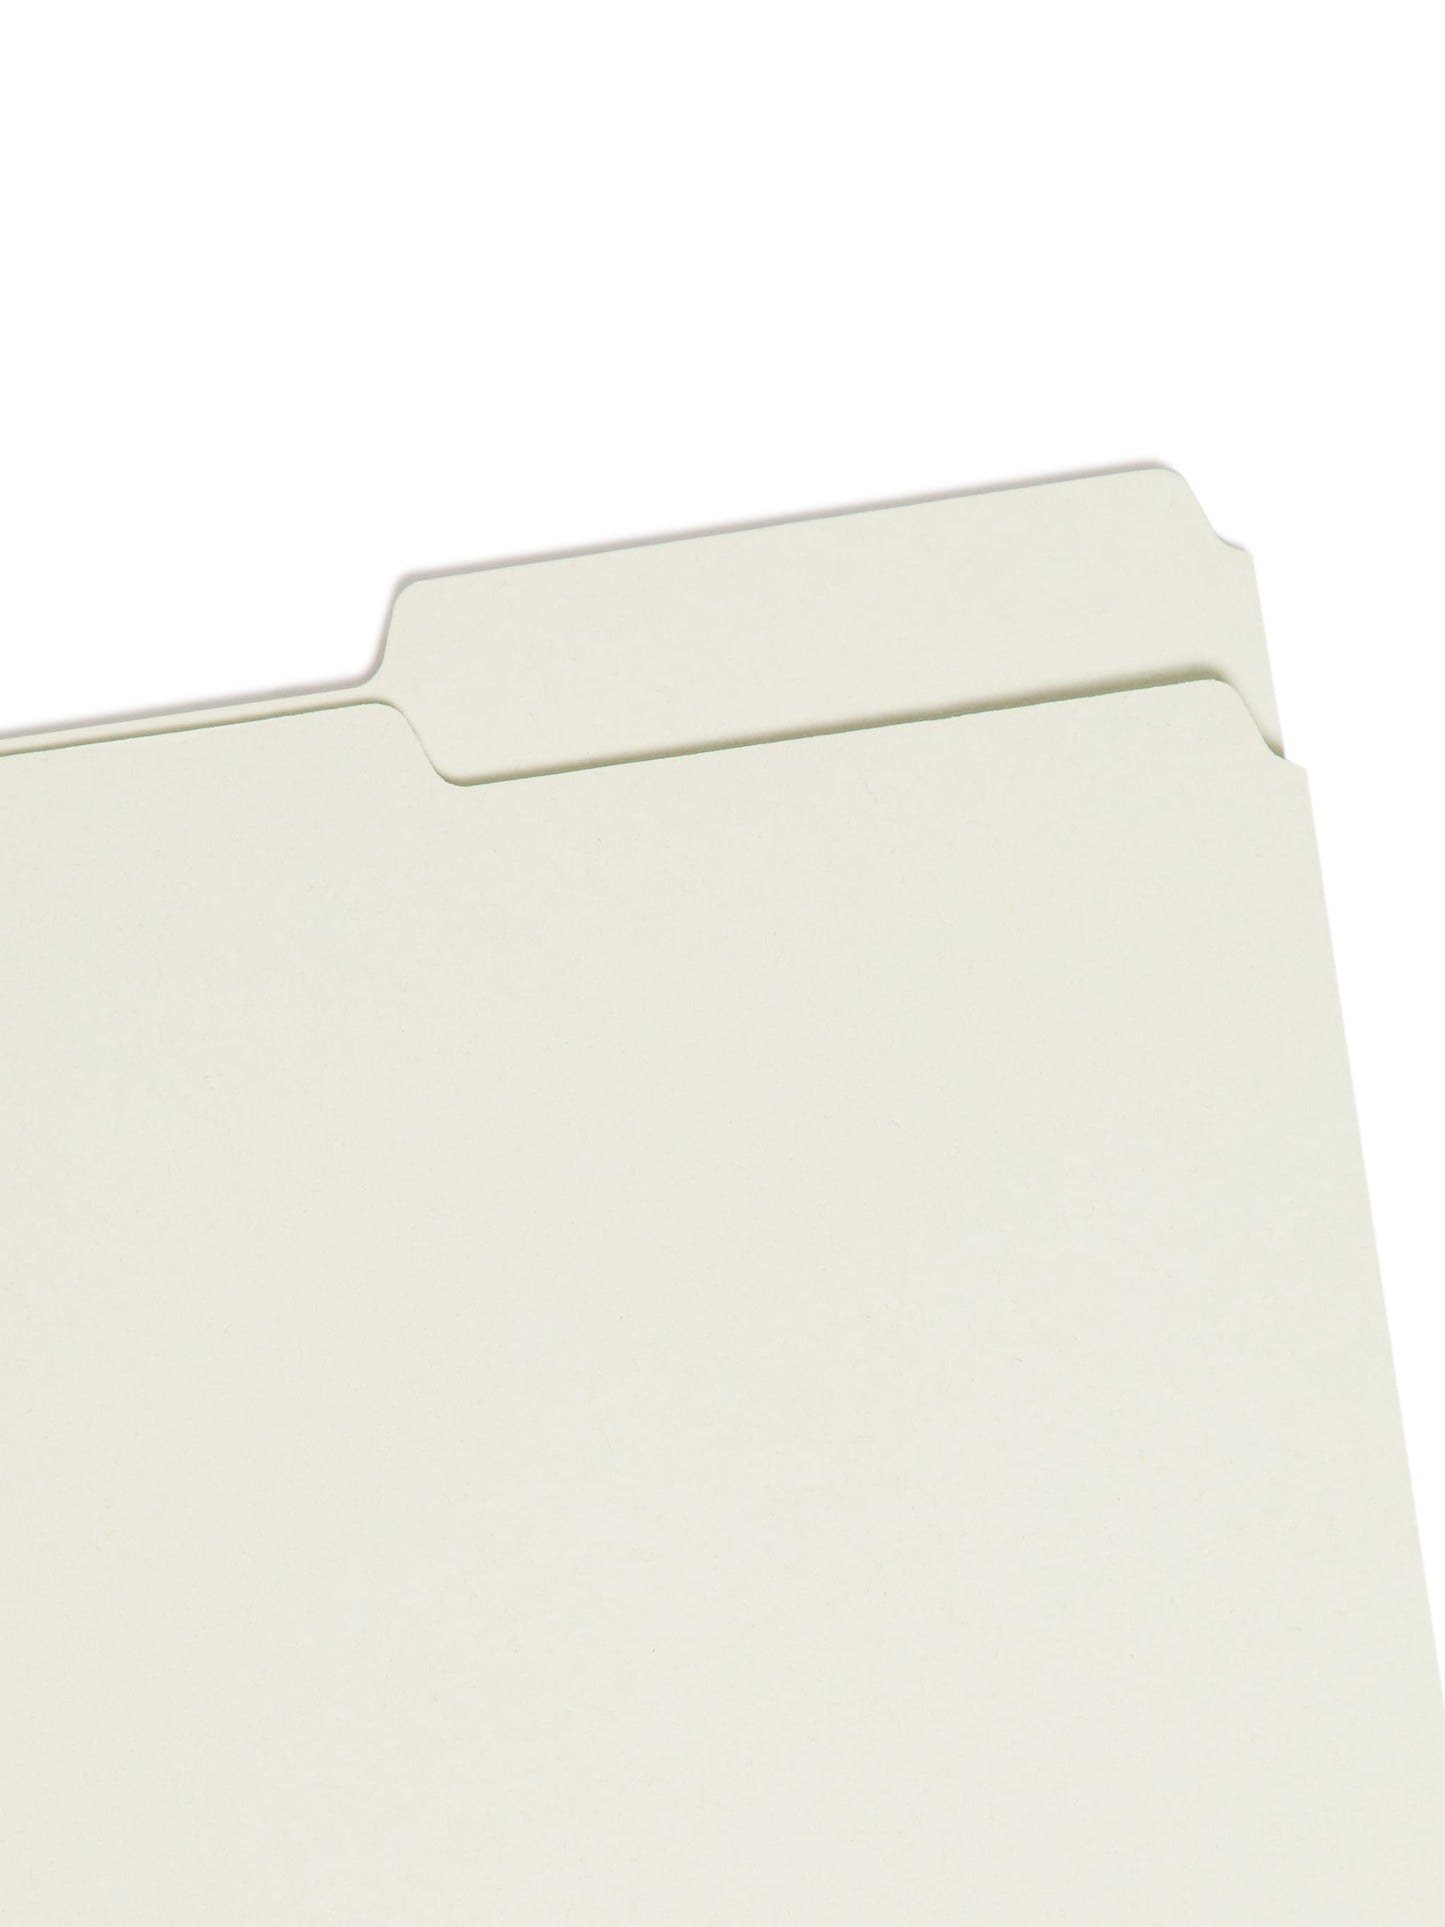 SafeSHIELD® Pressboard Fastener File Folders, 2 inch Expansion, 2/5-Cut Tab, Gray/Green Color, Letter Size, Set of 25, 086486149204